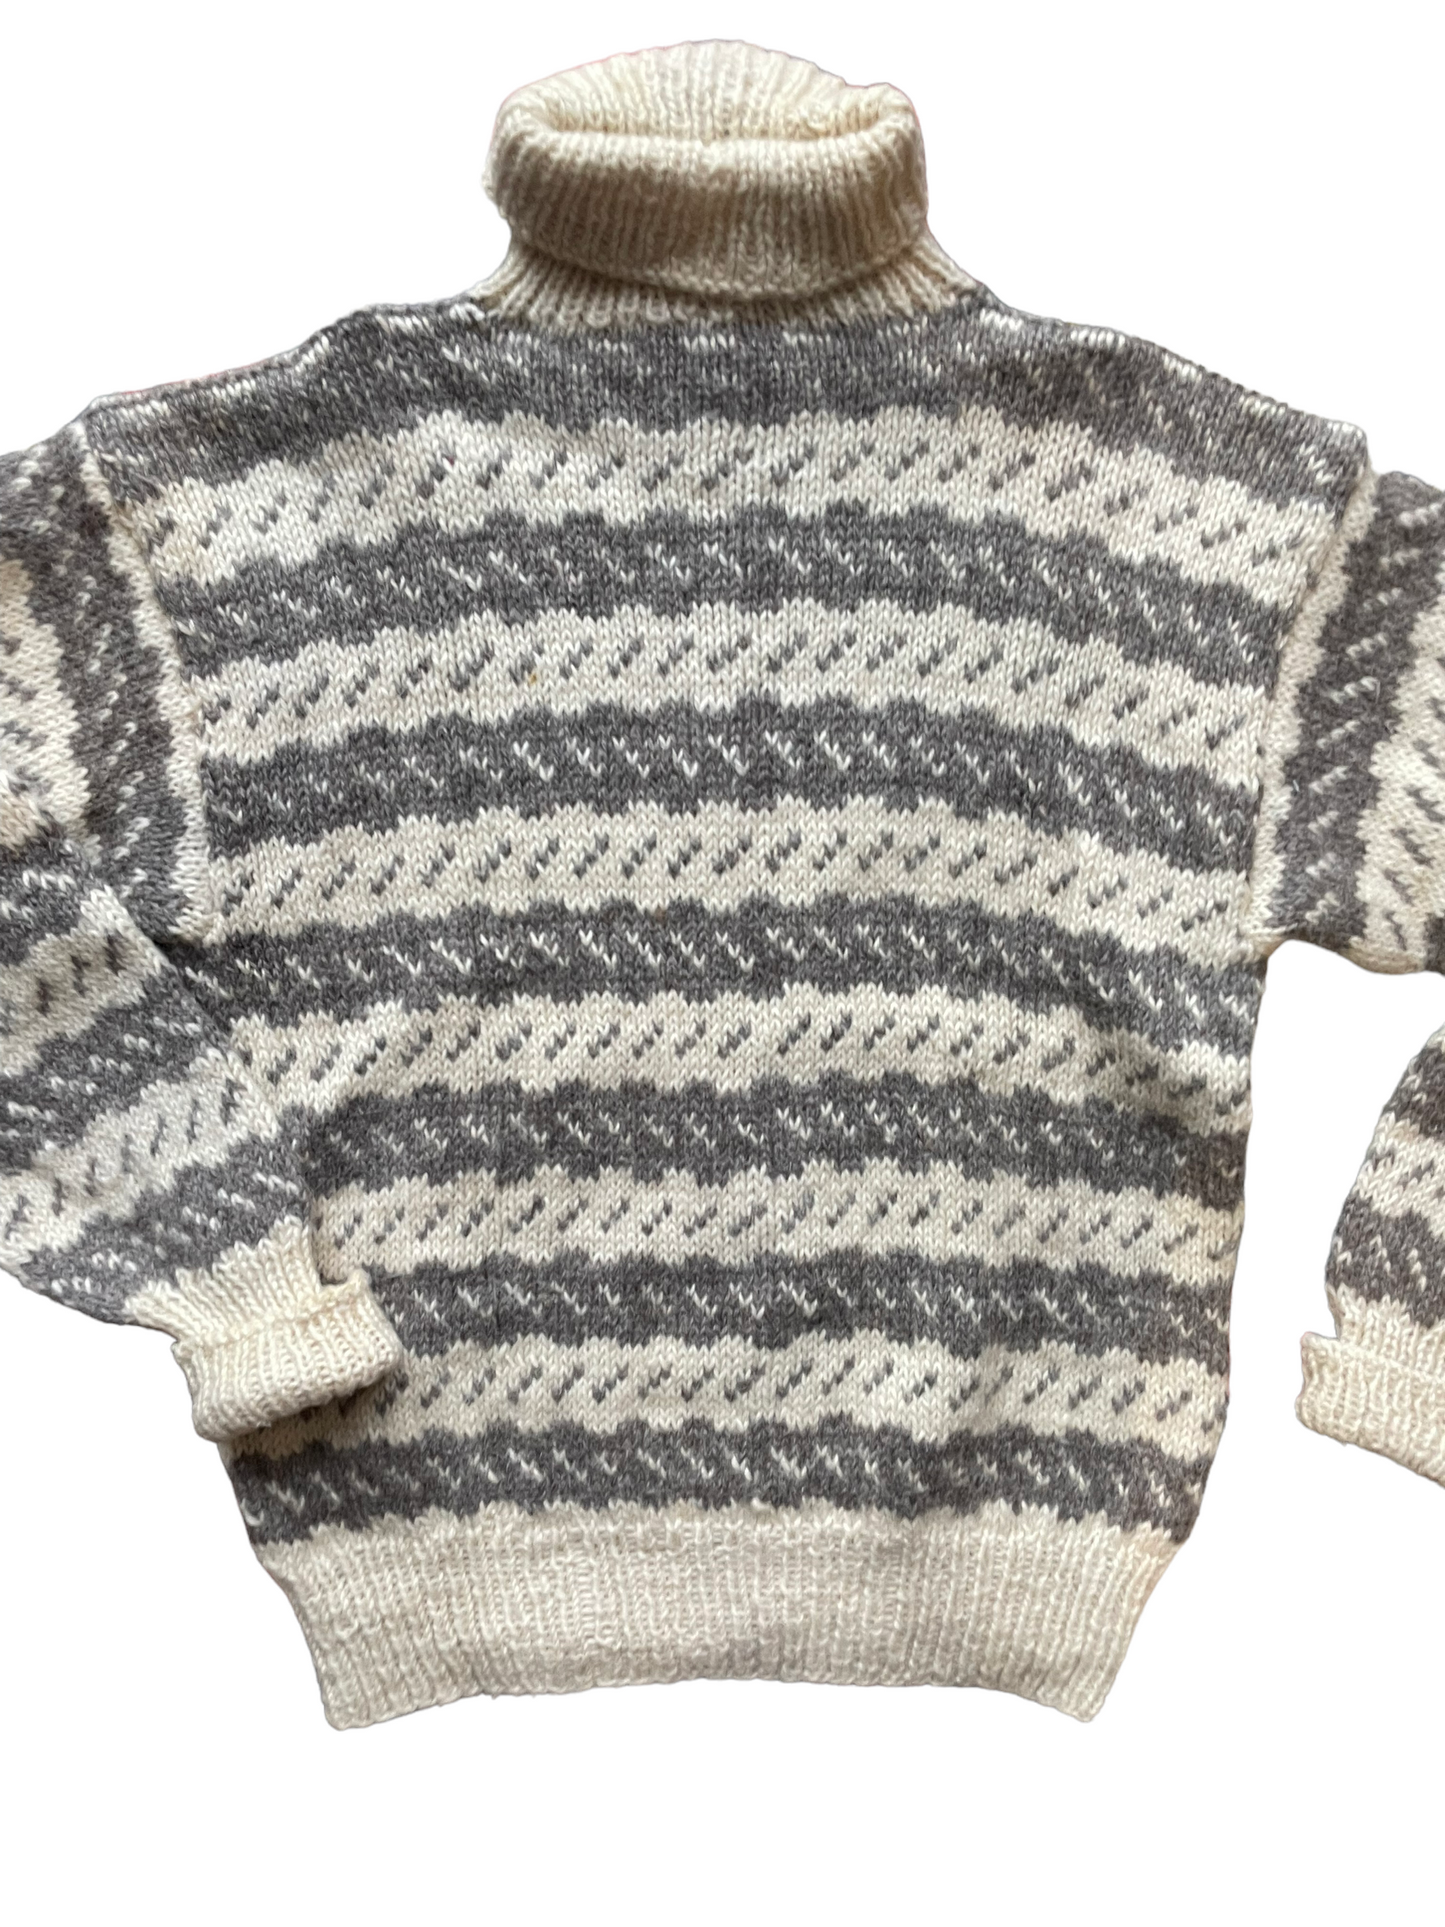 Vintage Wool Sweater Made in Denmark |  Barn Owl Seattle | Seattle Vintage Sweaters Full back view.